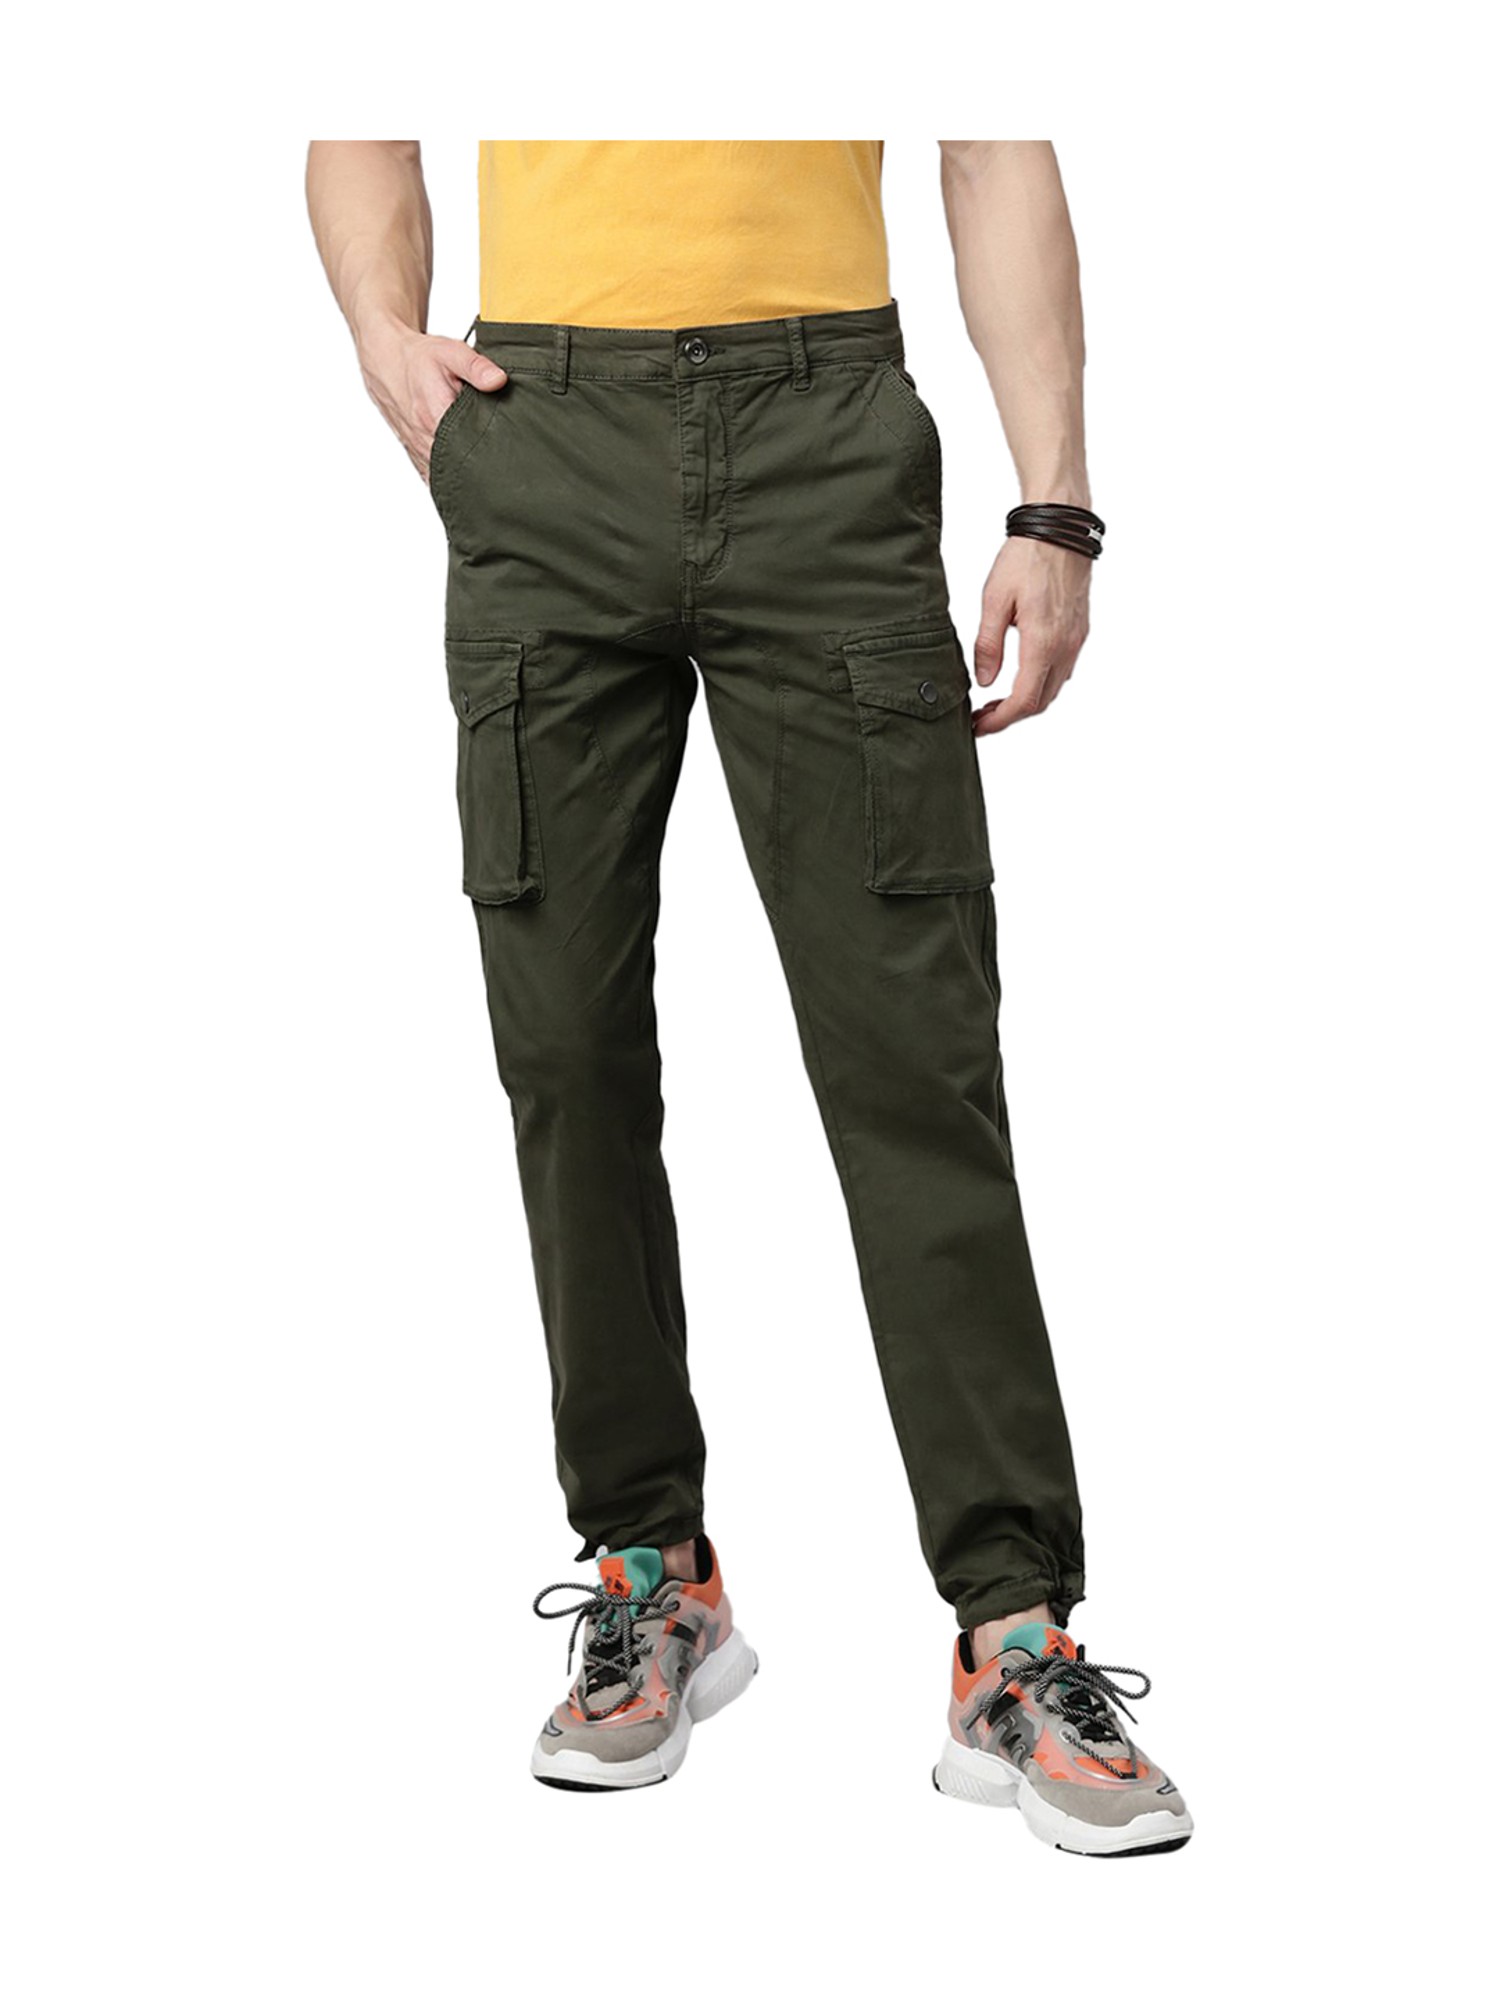 Buy Olive Green Cargo Pants for Men Online in India Beyoung